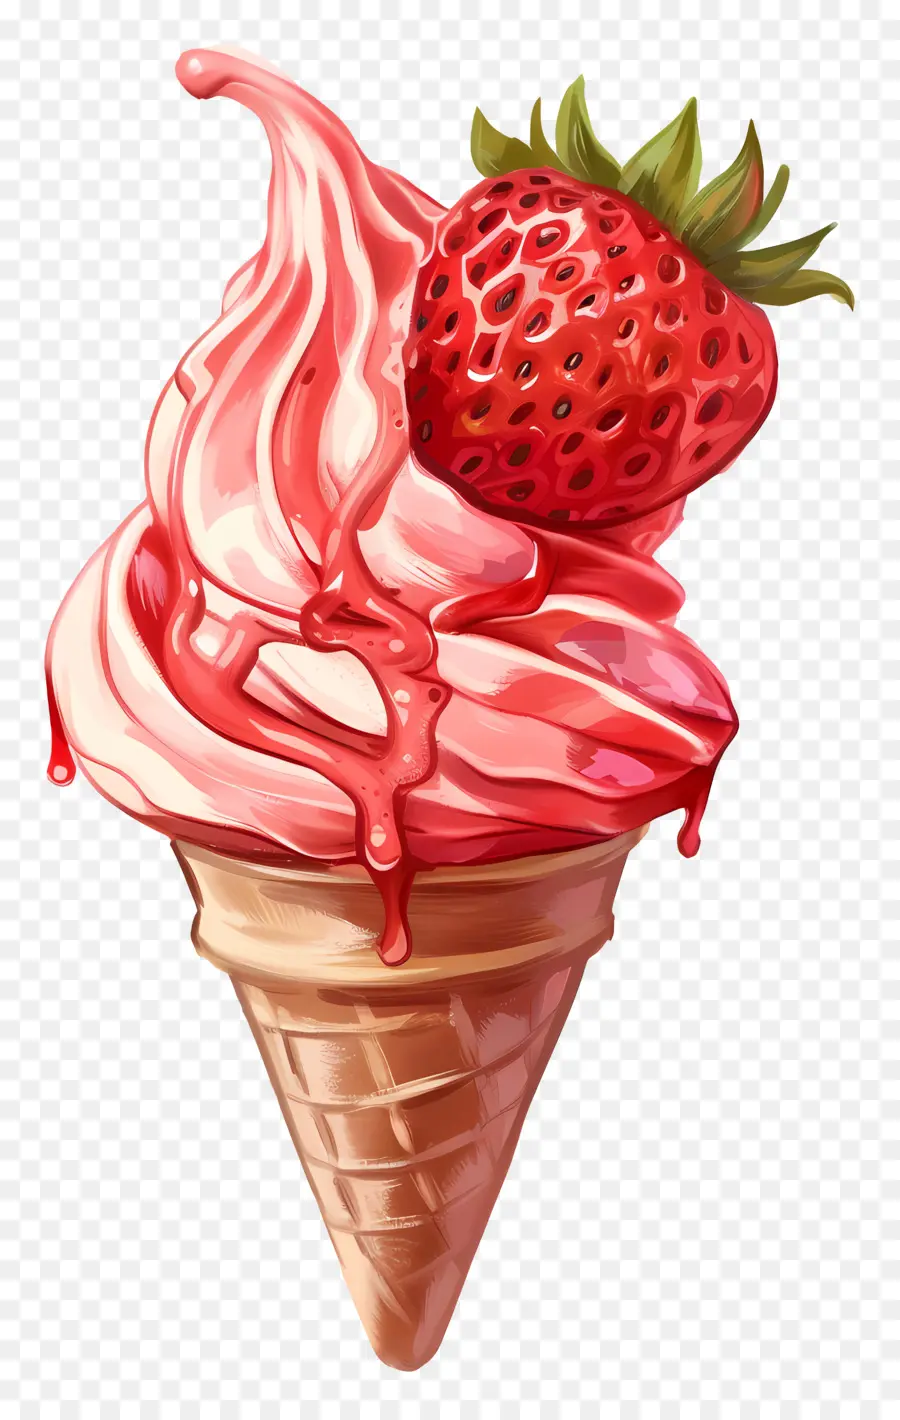 ice cream strawberry strawberry ice cream waffle cone pink ice cream syrup